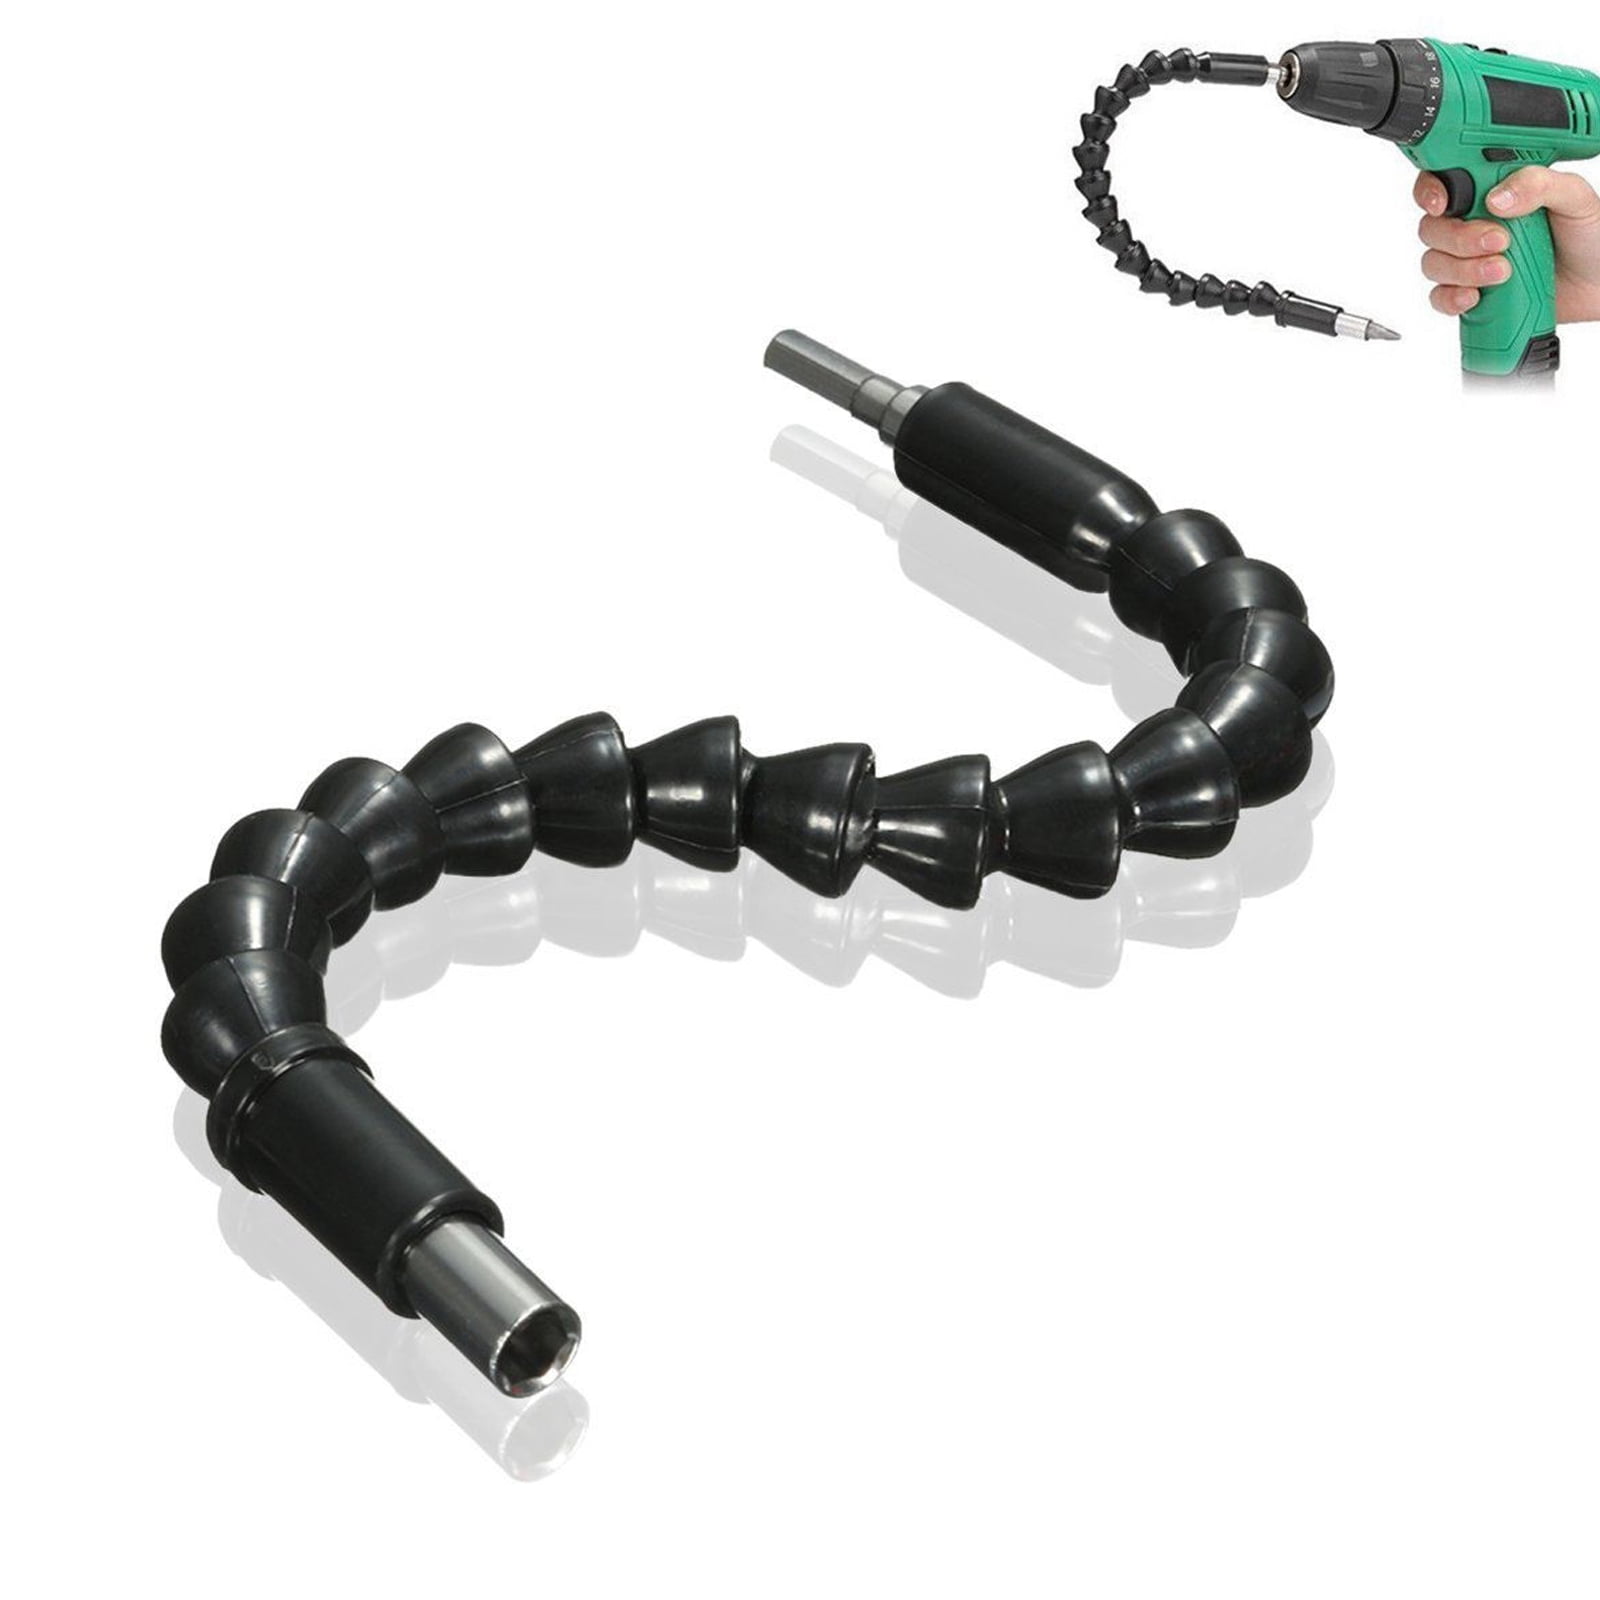 Electric drill Accessories Screwdrive Bits Flexible Extension Bar Socket Adapter